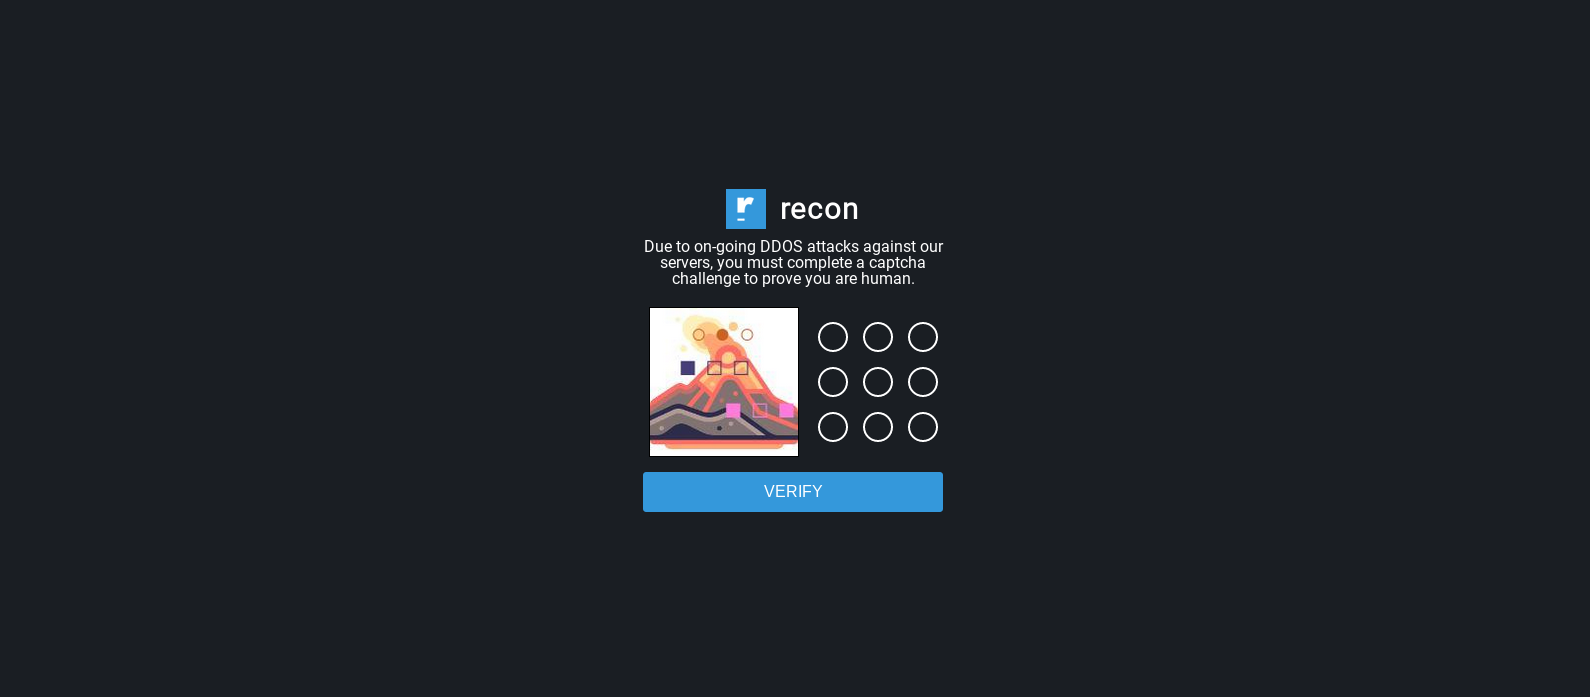 Recon search engine